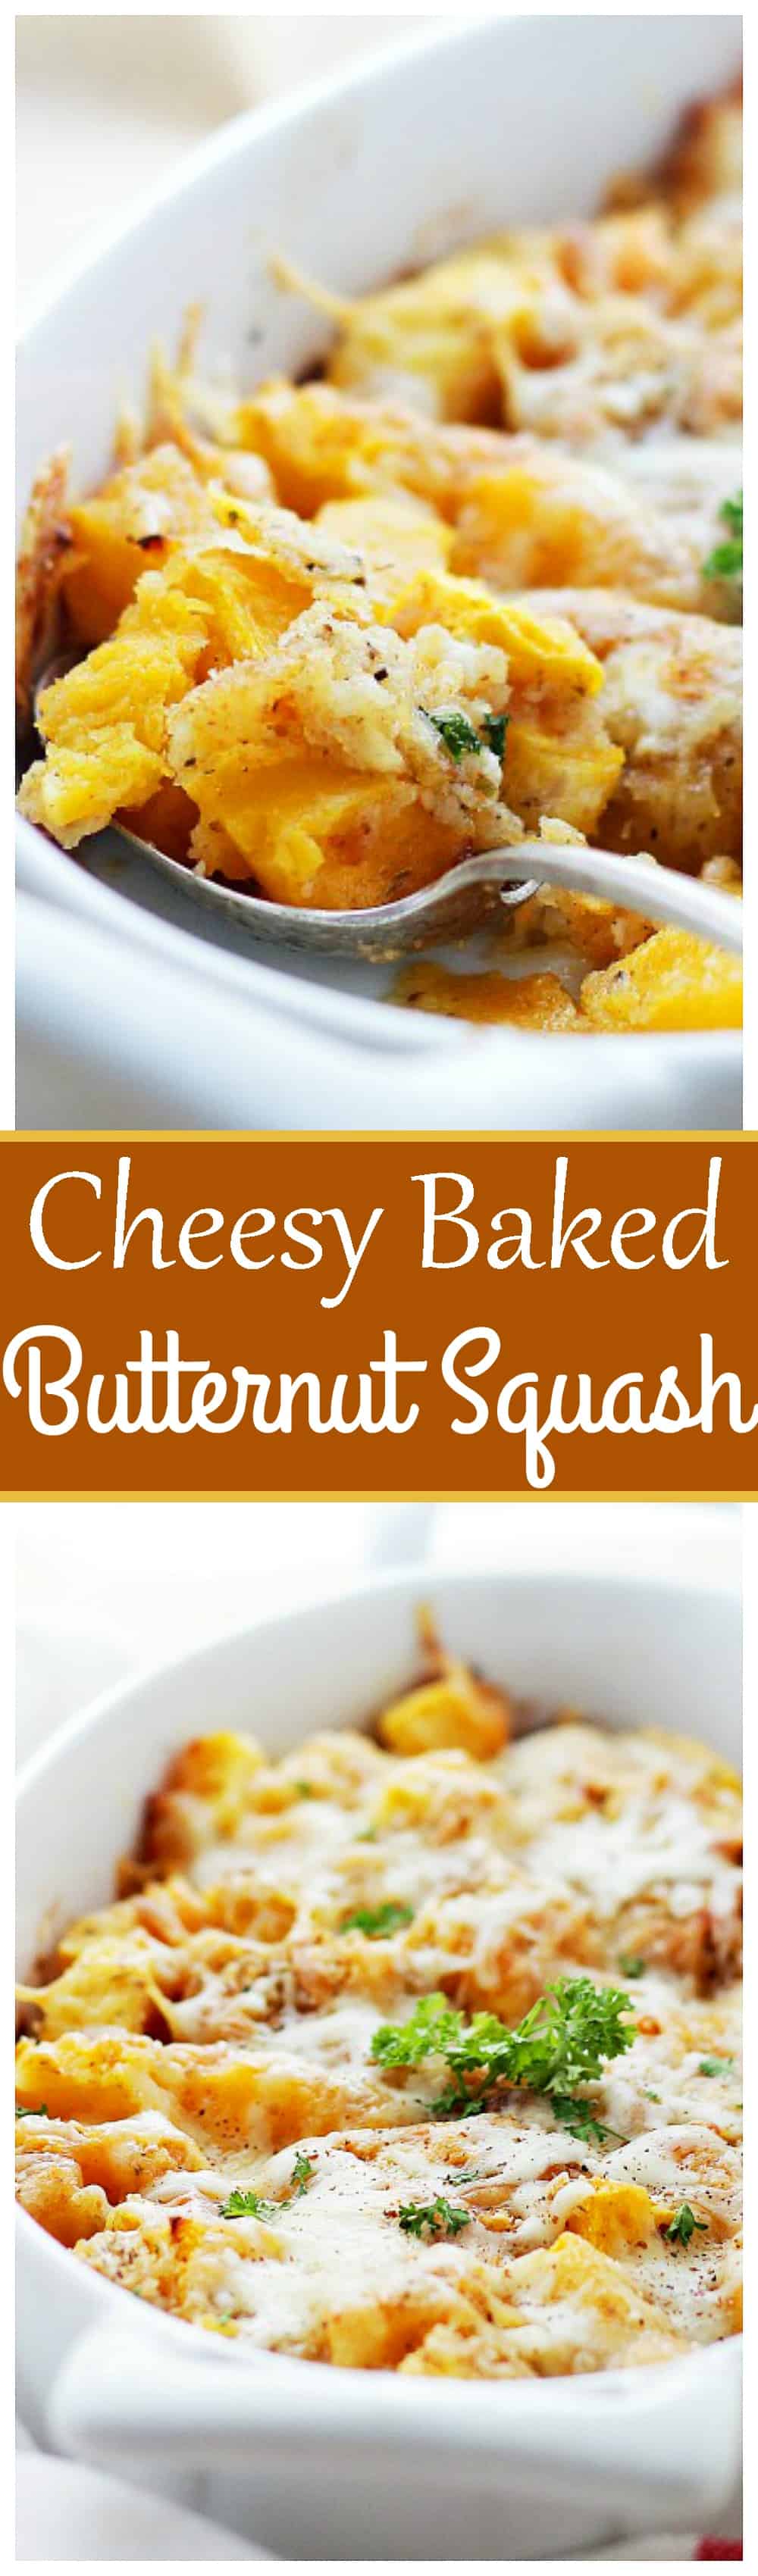 Cheesy Baked Butternut Squash Recipe | Diethood